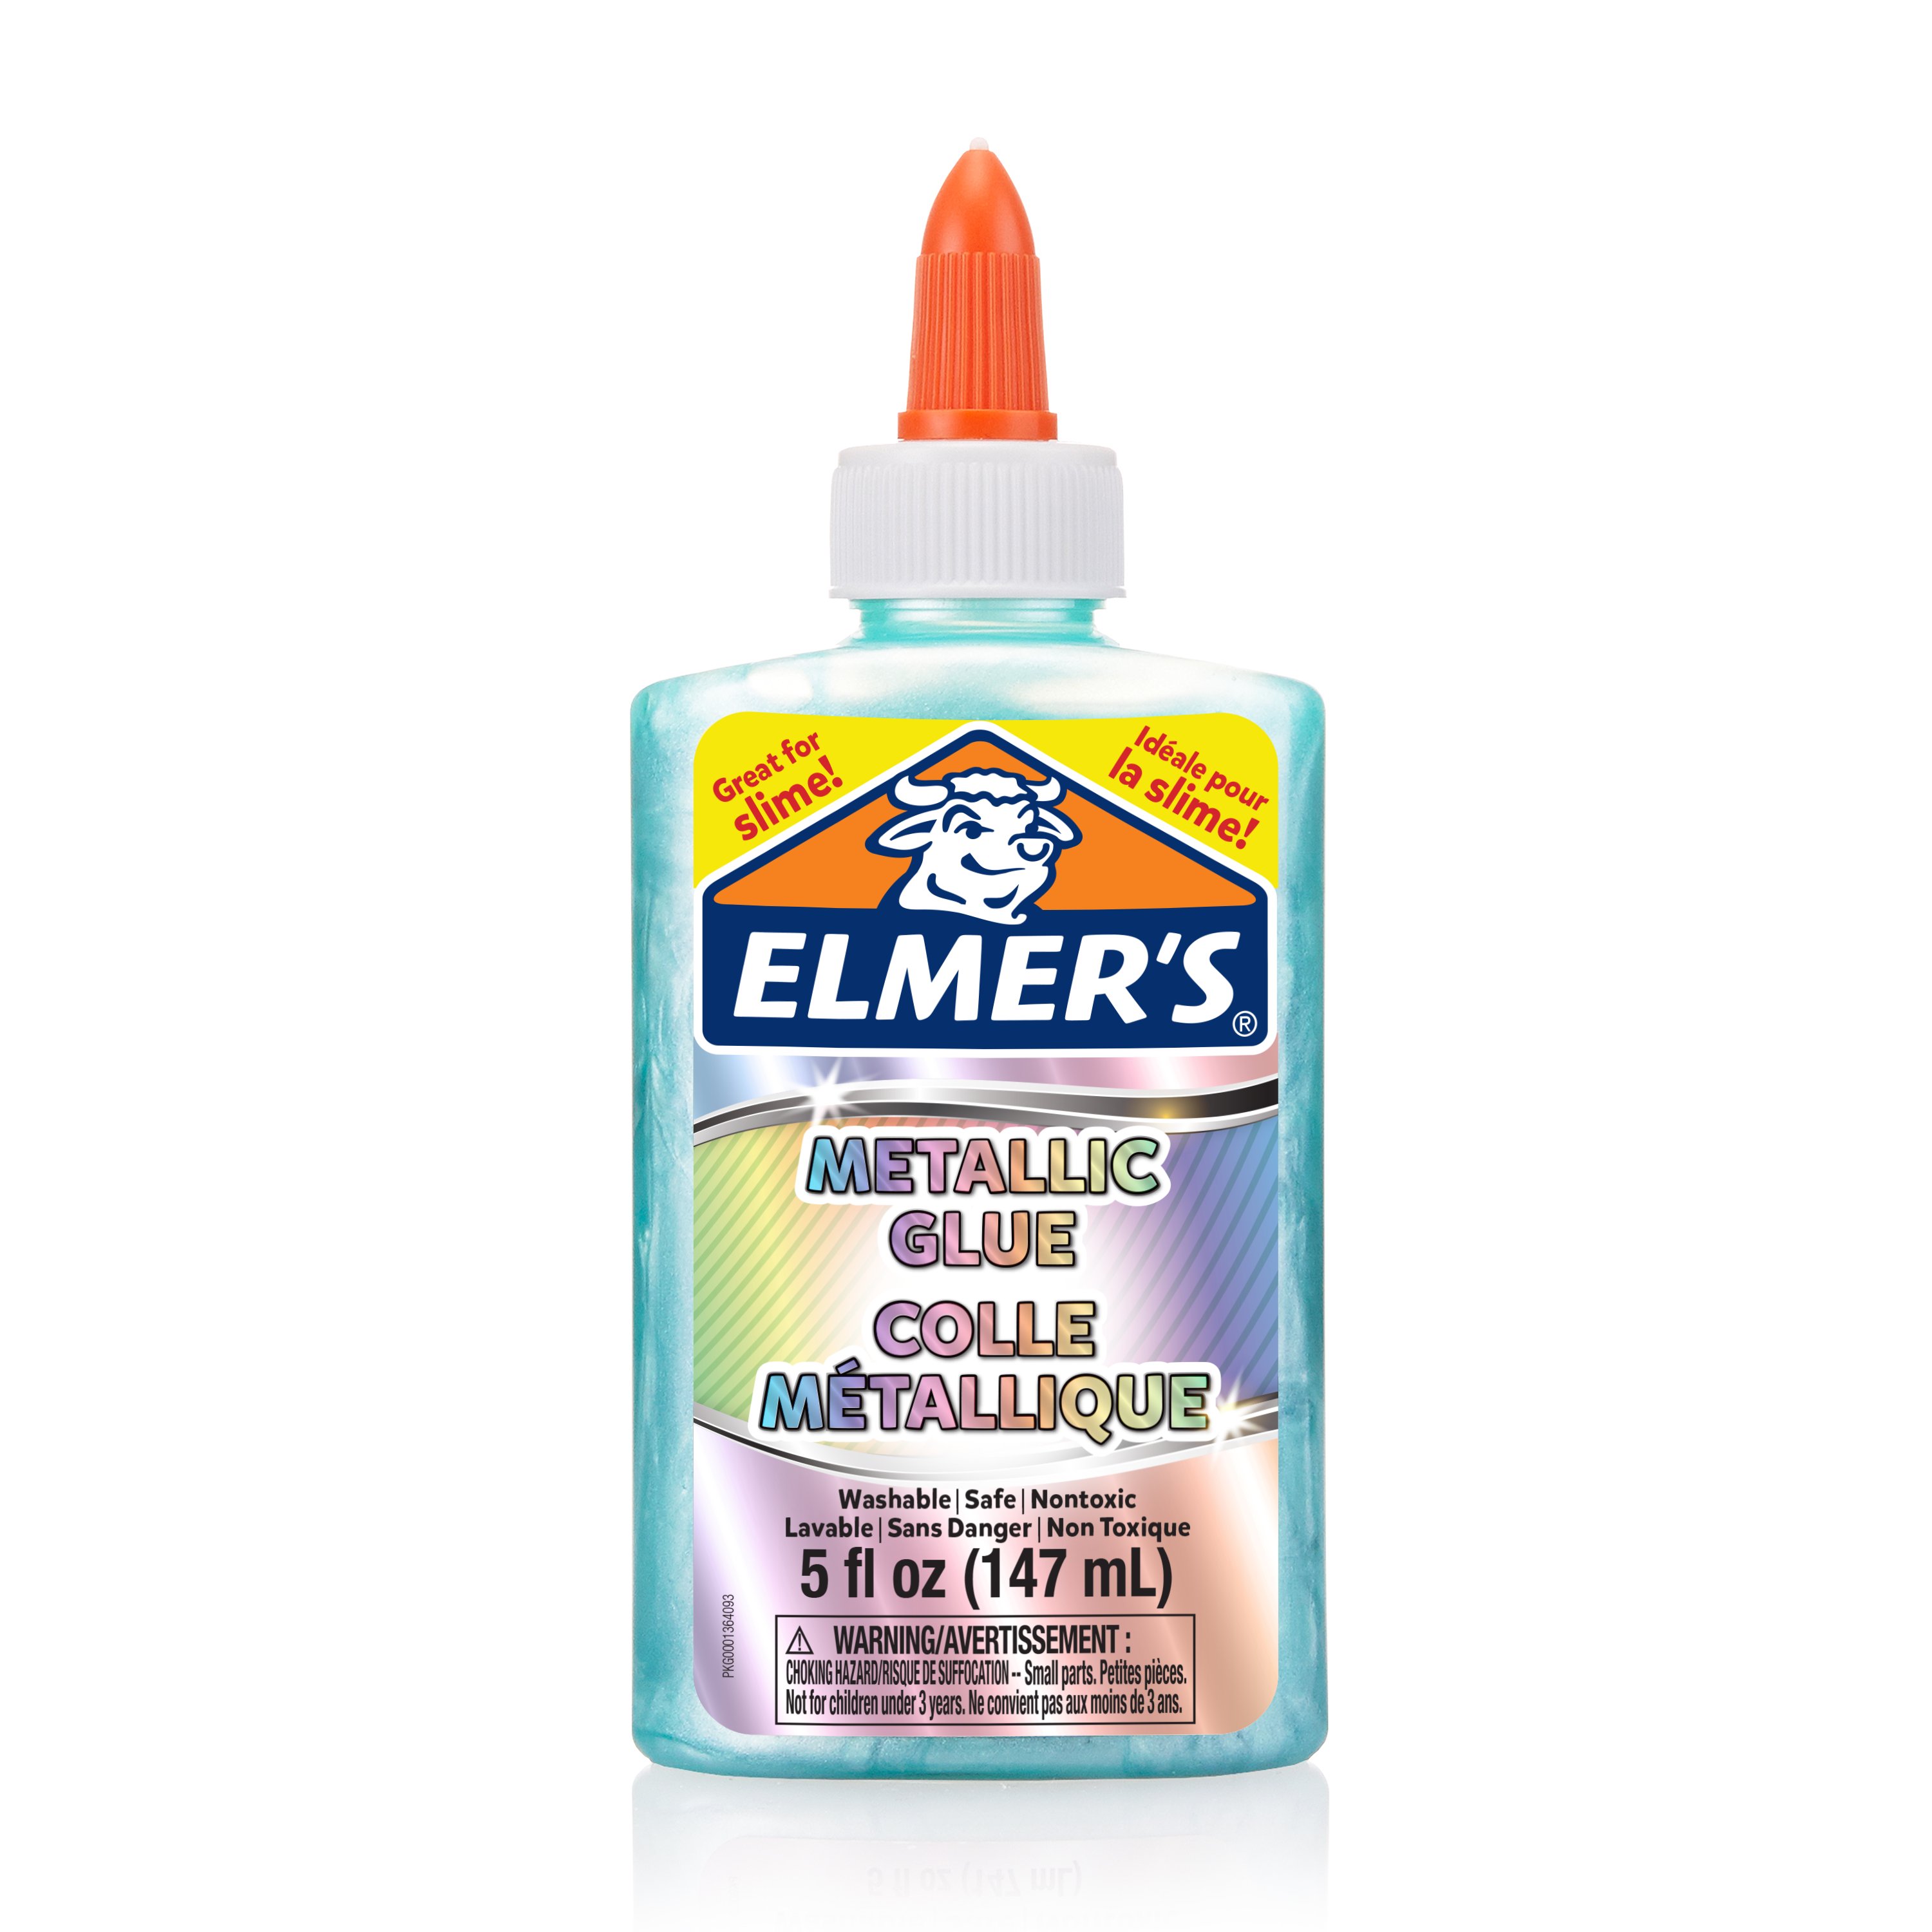 Elmer's Metallic Slime Kit 2 Batches Teal & Pink Magical Liquid